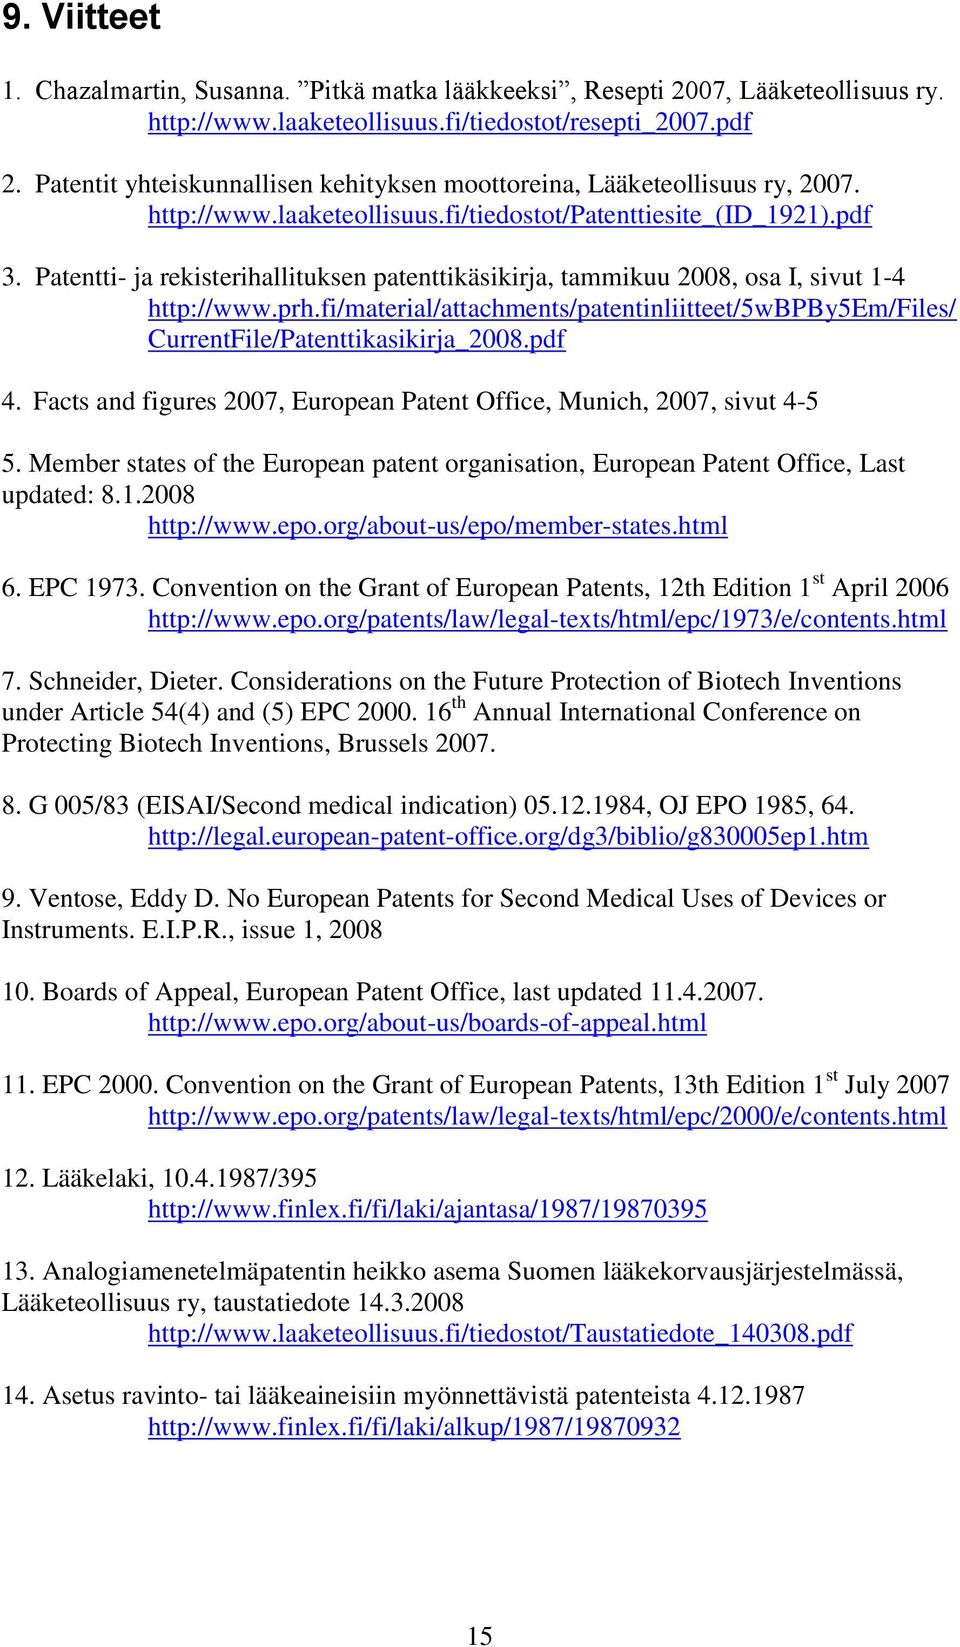 Patentti- ja rekisterihallituksen patenttikäsikirja, tammikuu 2008, osa I, sivut 1-4 http://www.prh.fi/material/attachments/patentinliitteet/5wbpby5em/files/ CurrentFile/Patenttikasikirja_2008.pdf 4.